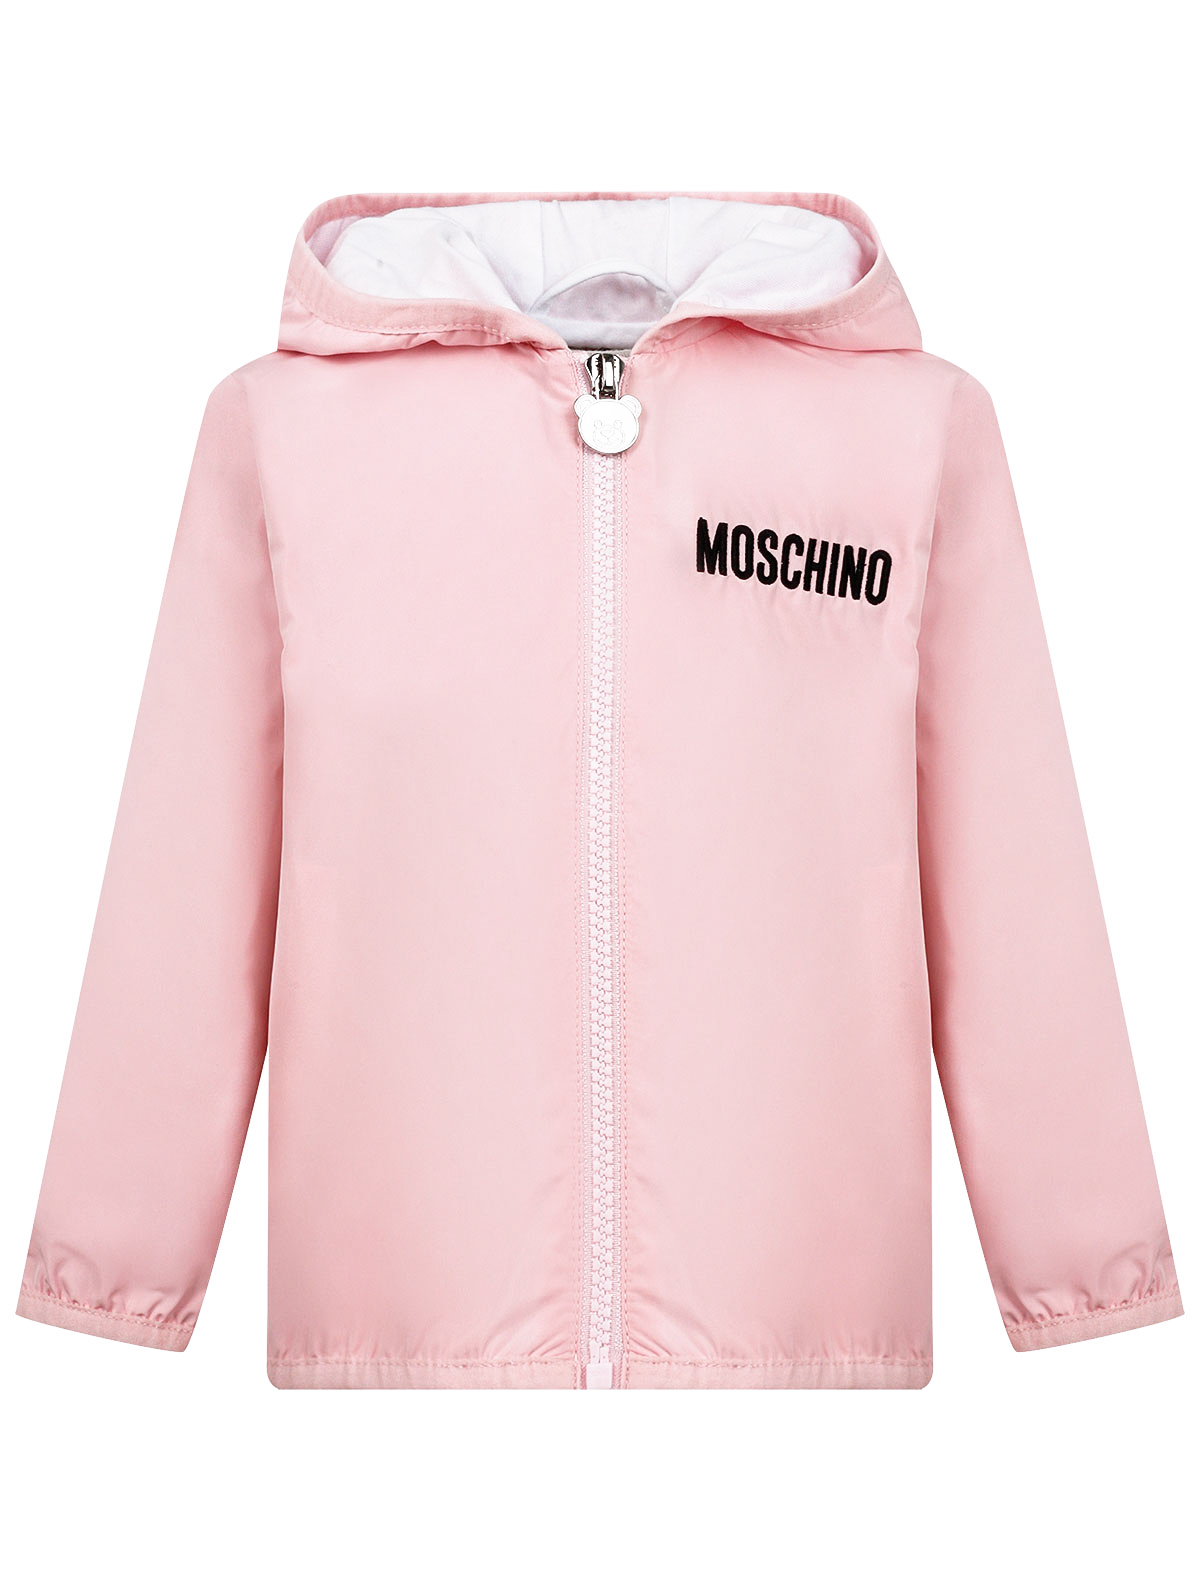 Куртка Moschino 2396251, цвет розовый, размер 2 1074509270447 - фото 1